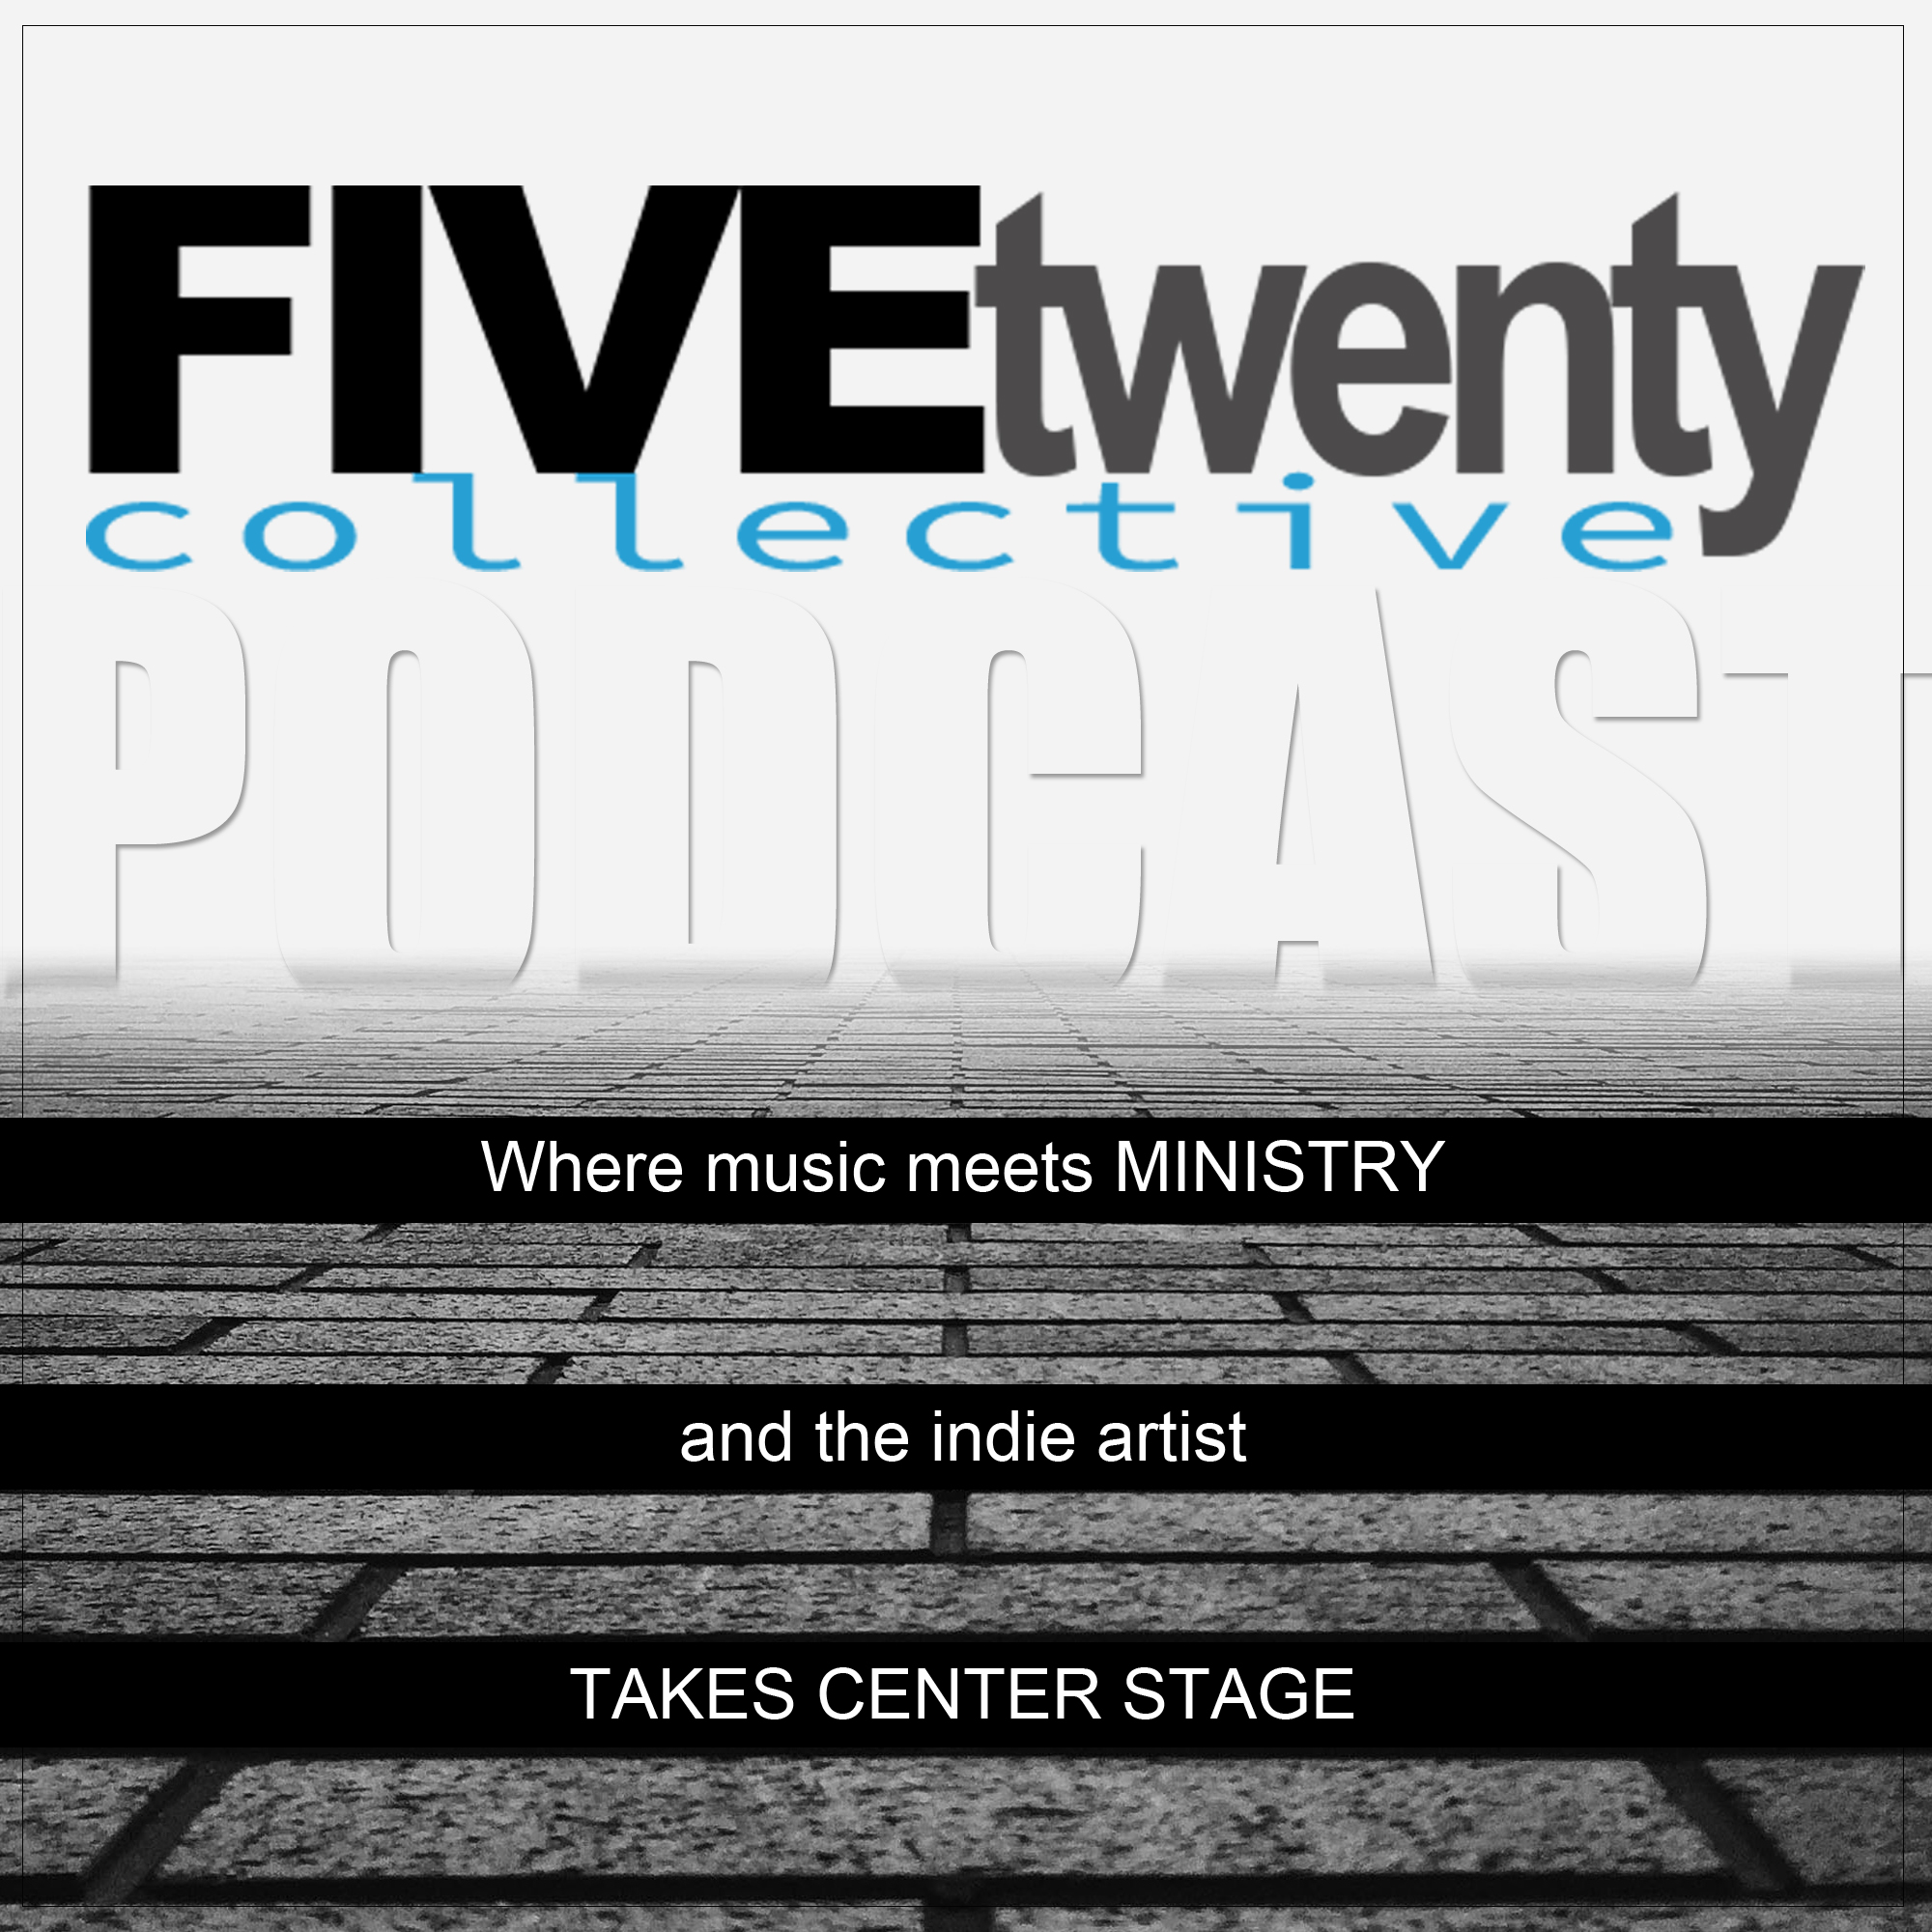 FiveTwenty Collective Podcast: Season One | Ep. 11 @FiveTwentyCHH @anthonyhaleraps @mrkellycole @EricBoston3 @Iam_NateDogg